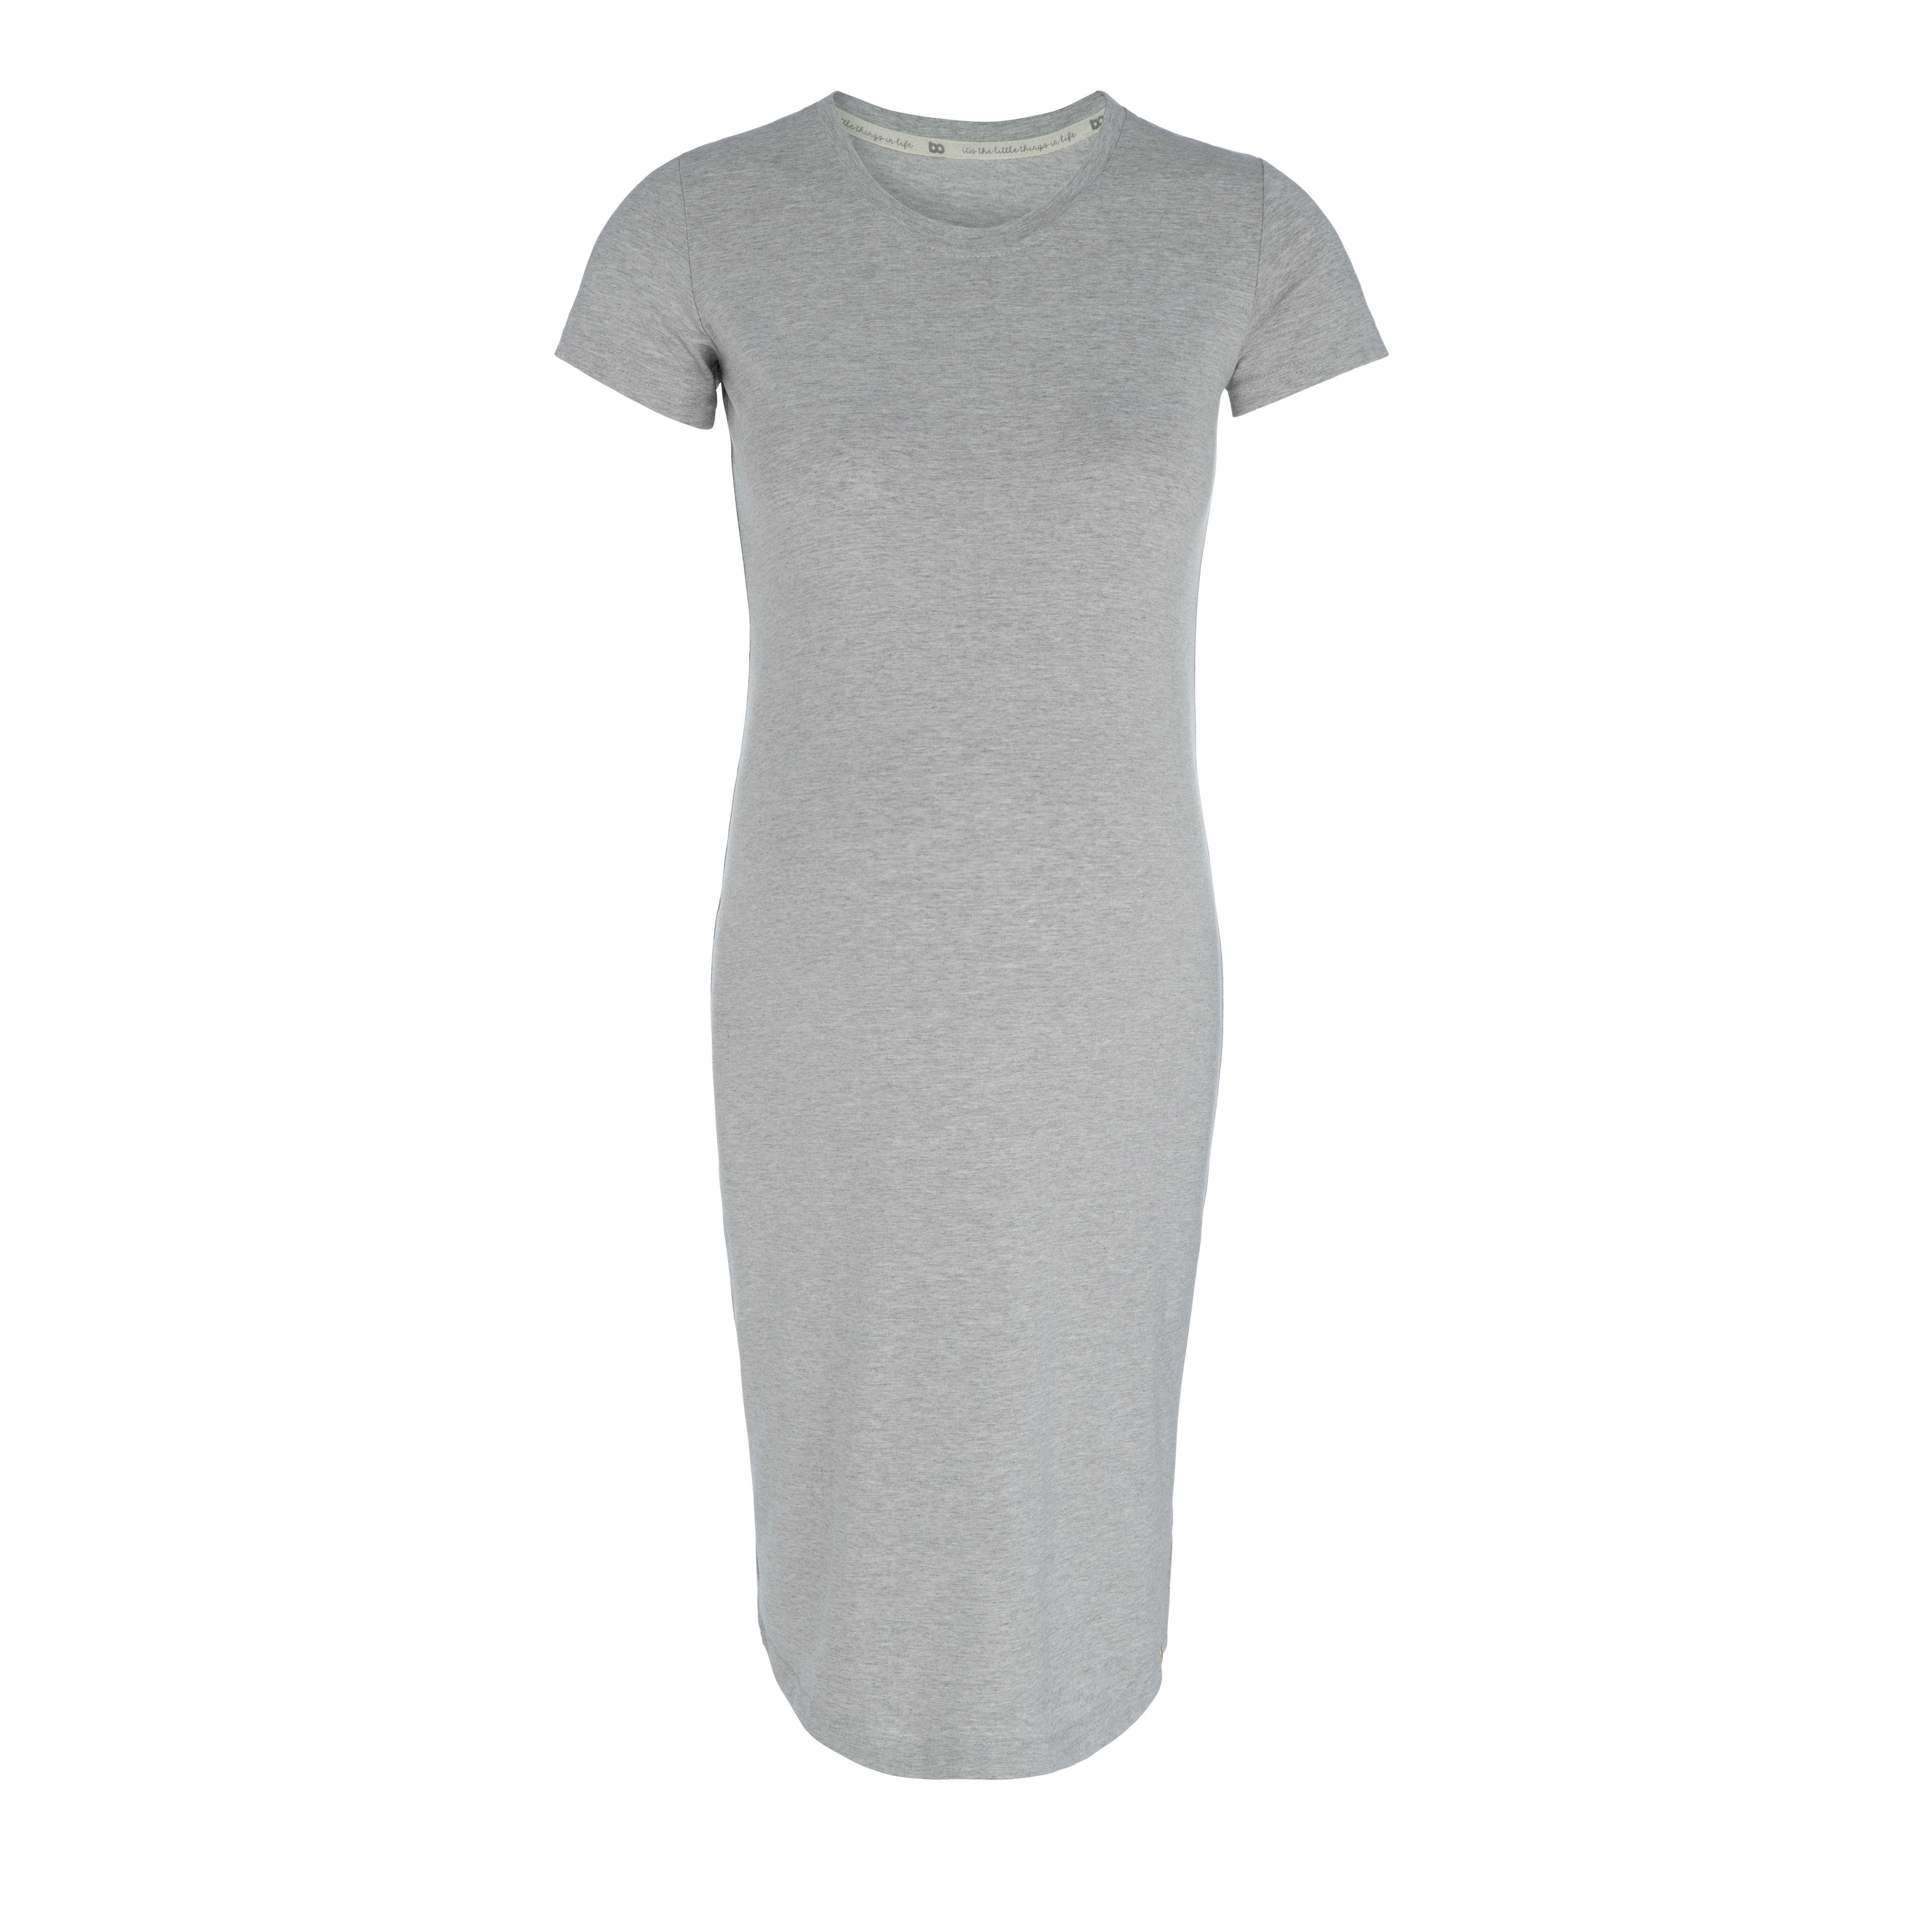 Maternity dress Glow dusty grey - L